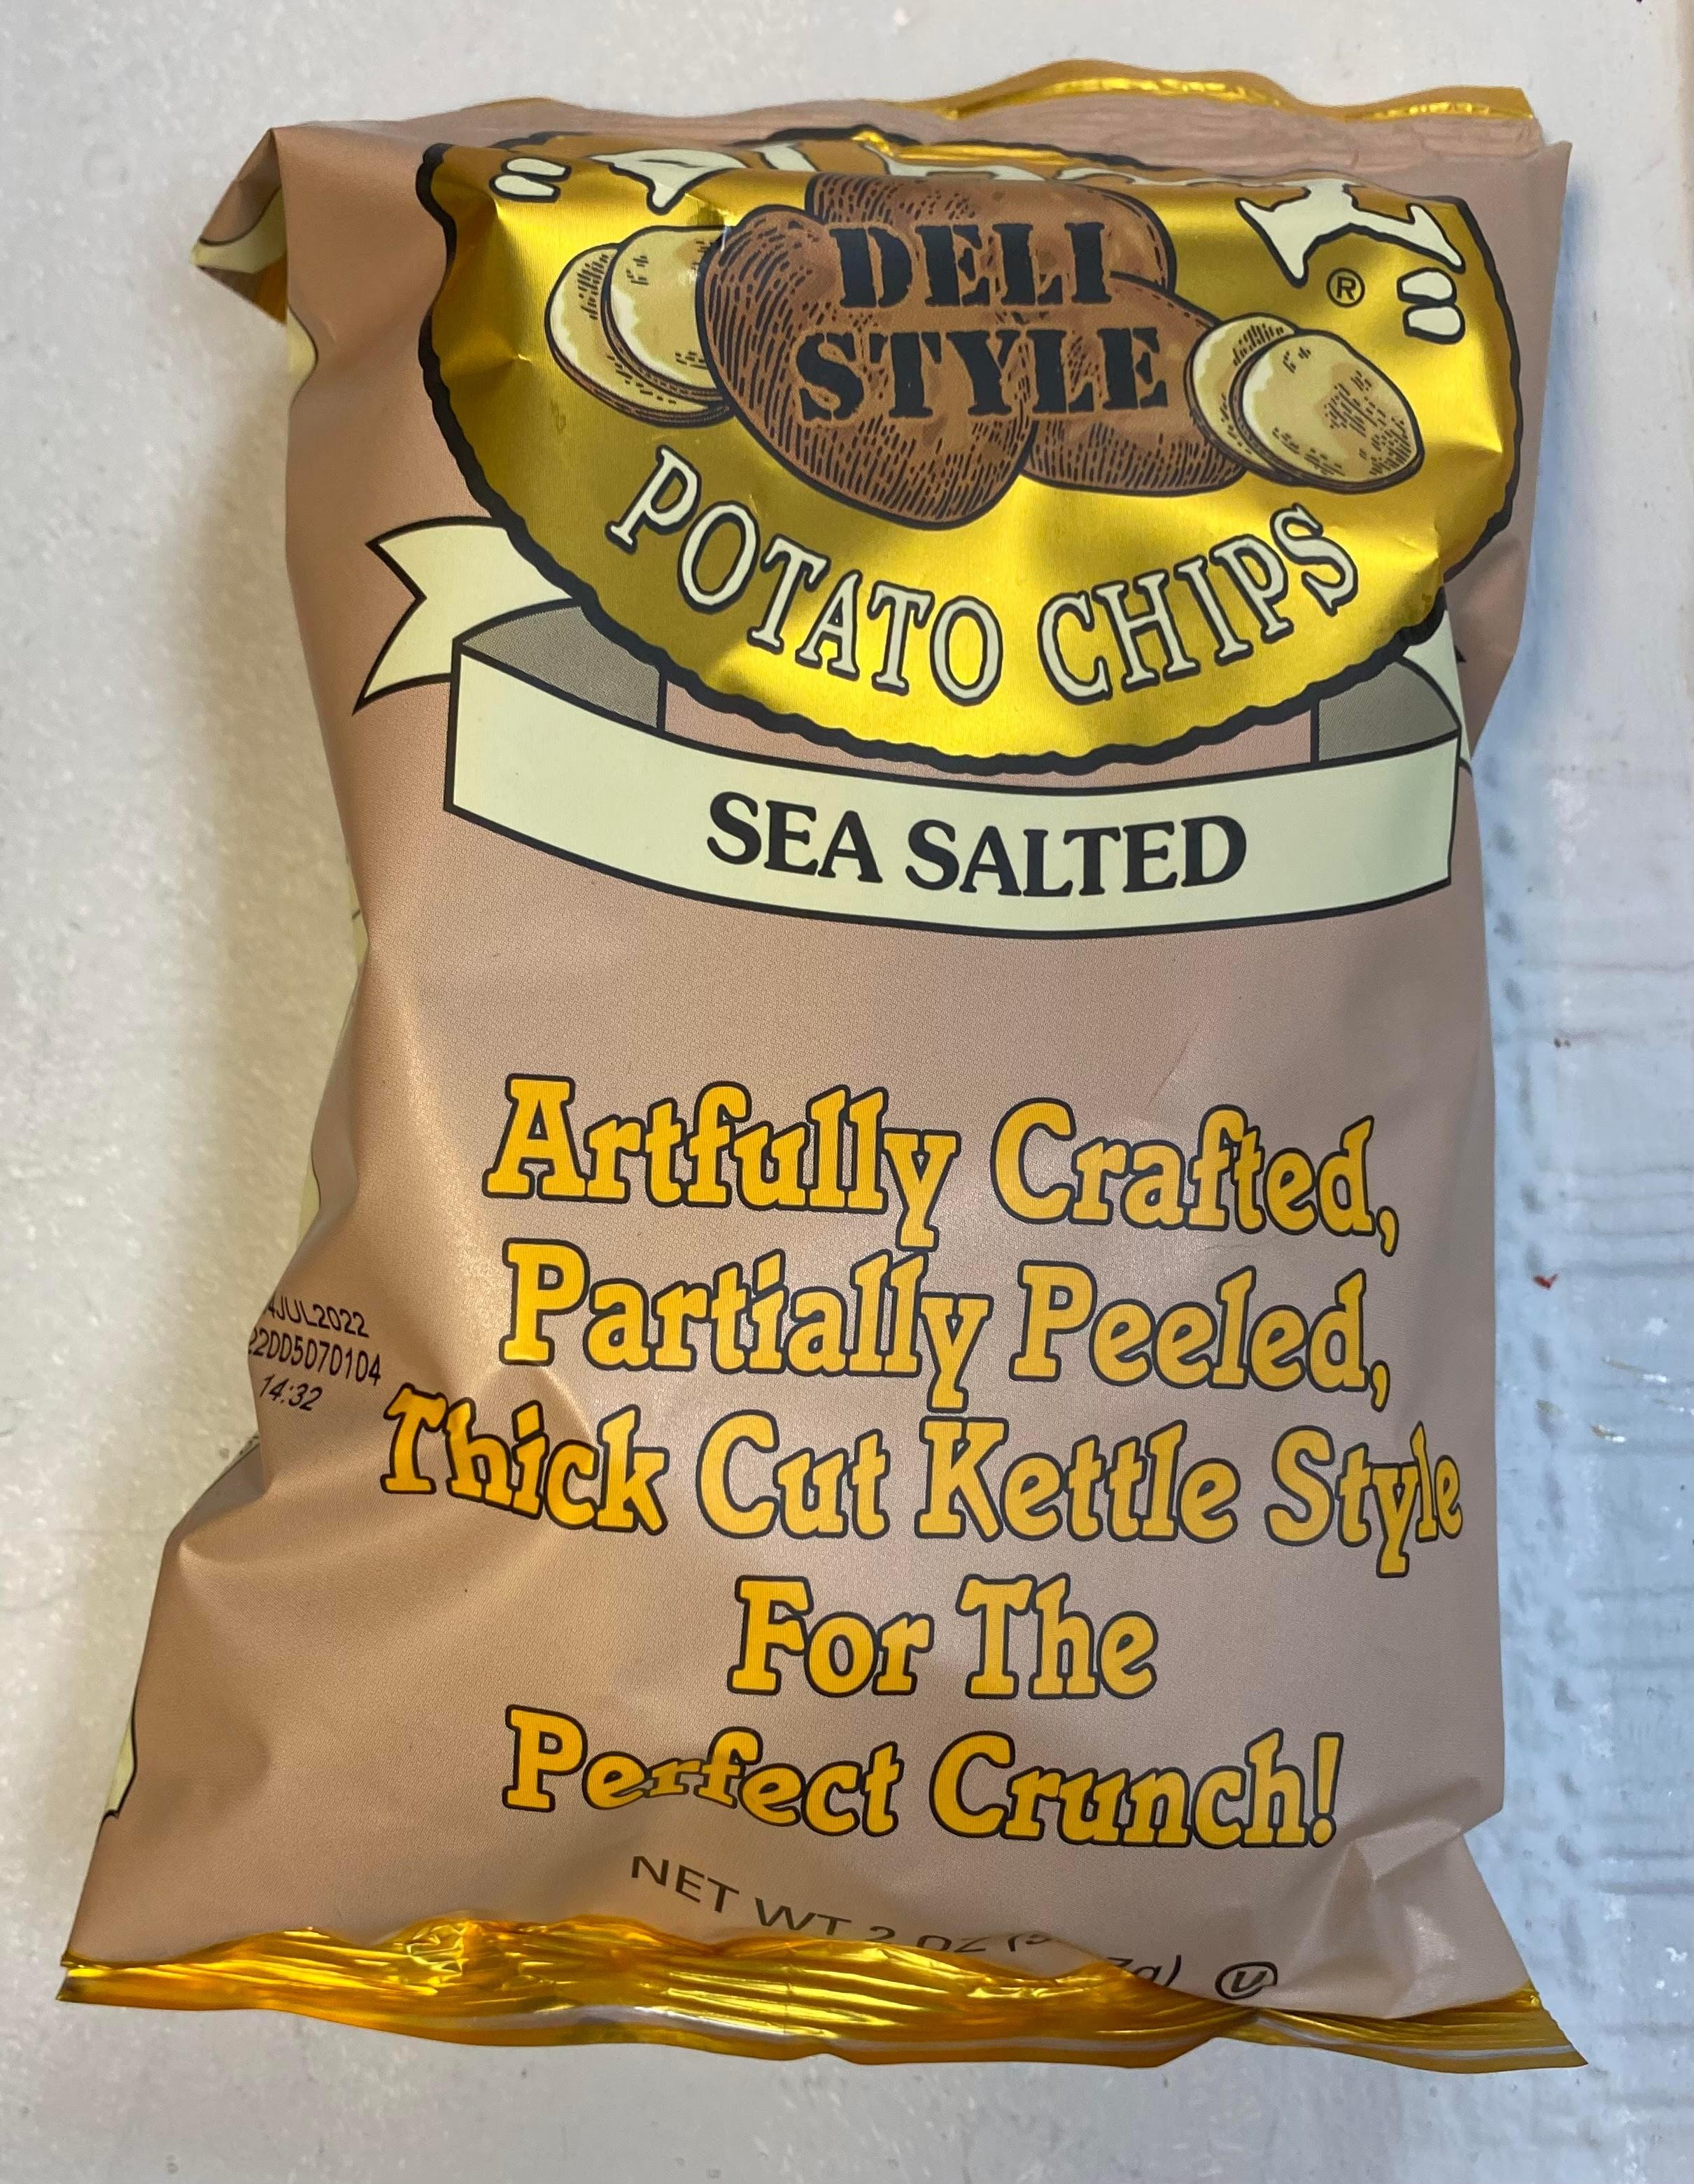 Sea Salted Potato Chips